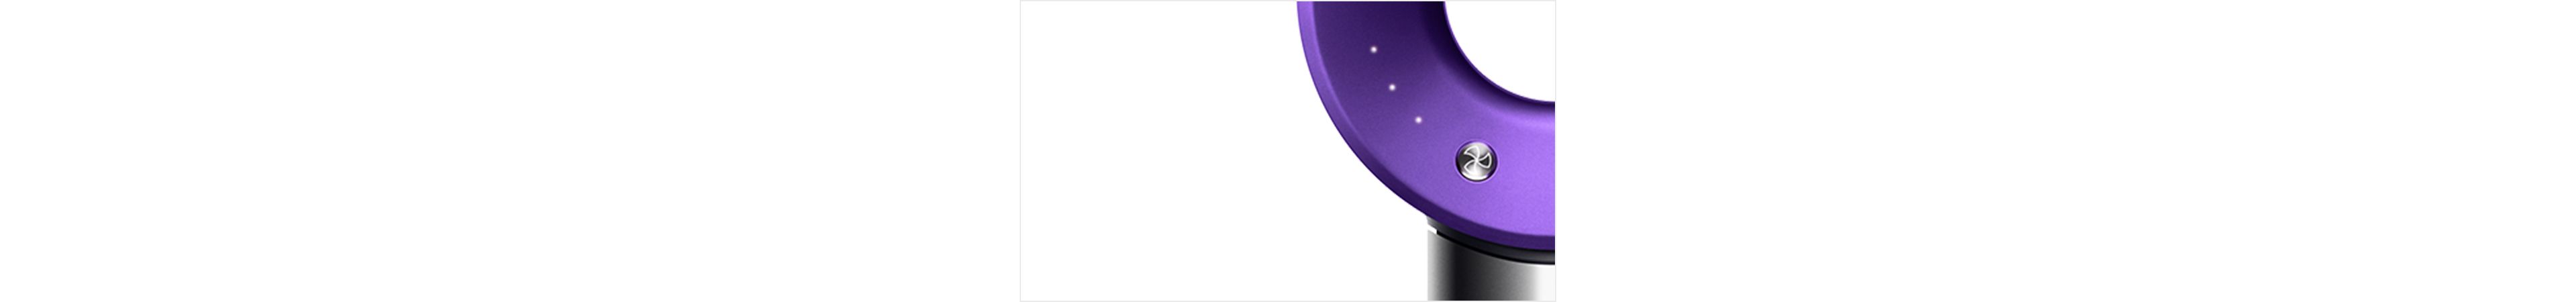 Dyson Supersonic Hair Dryer, Black/Purple - wide 6